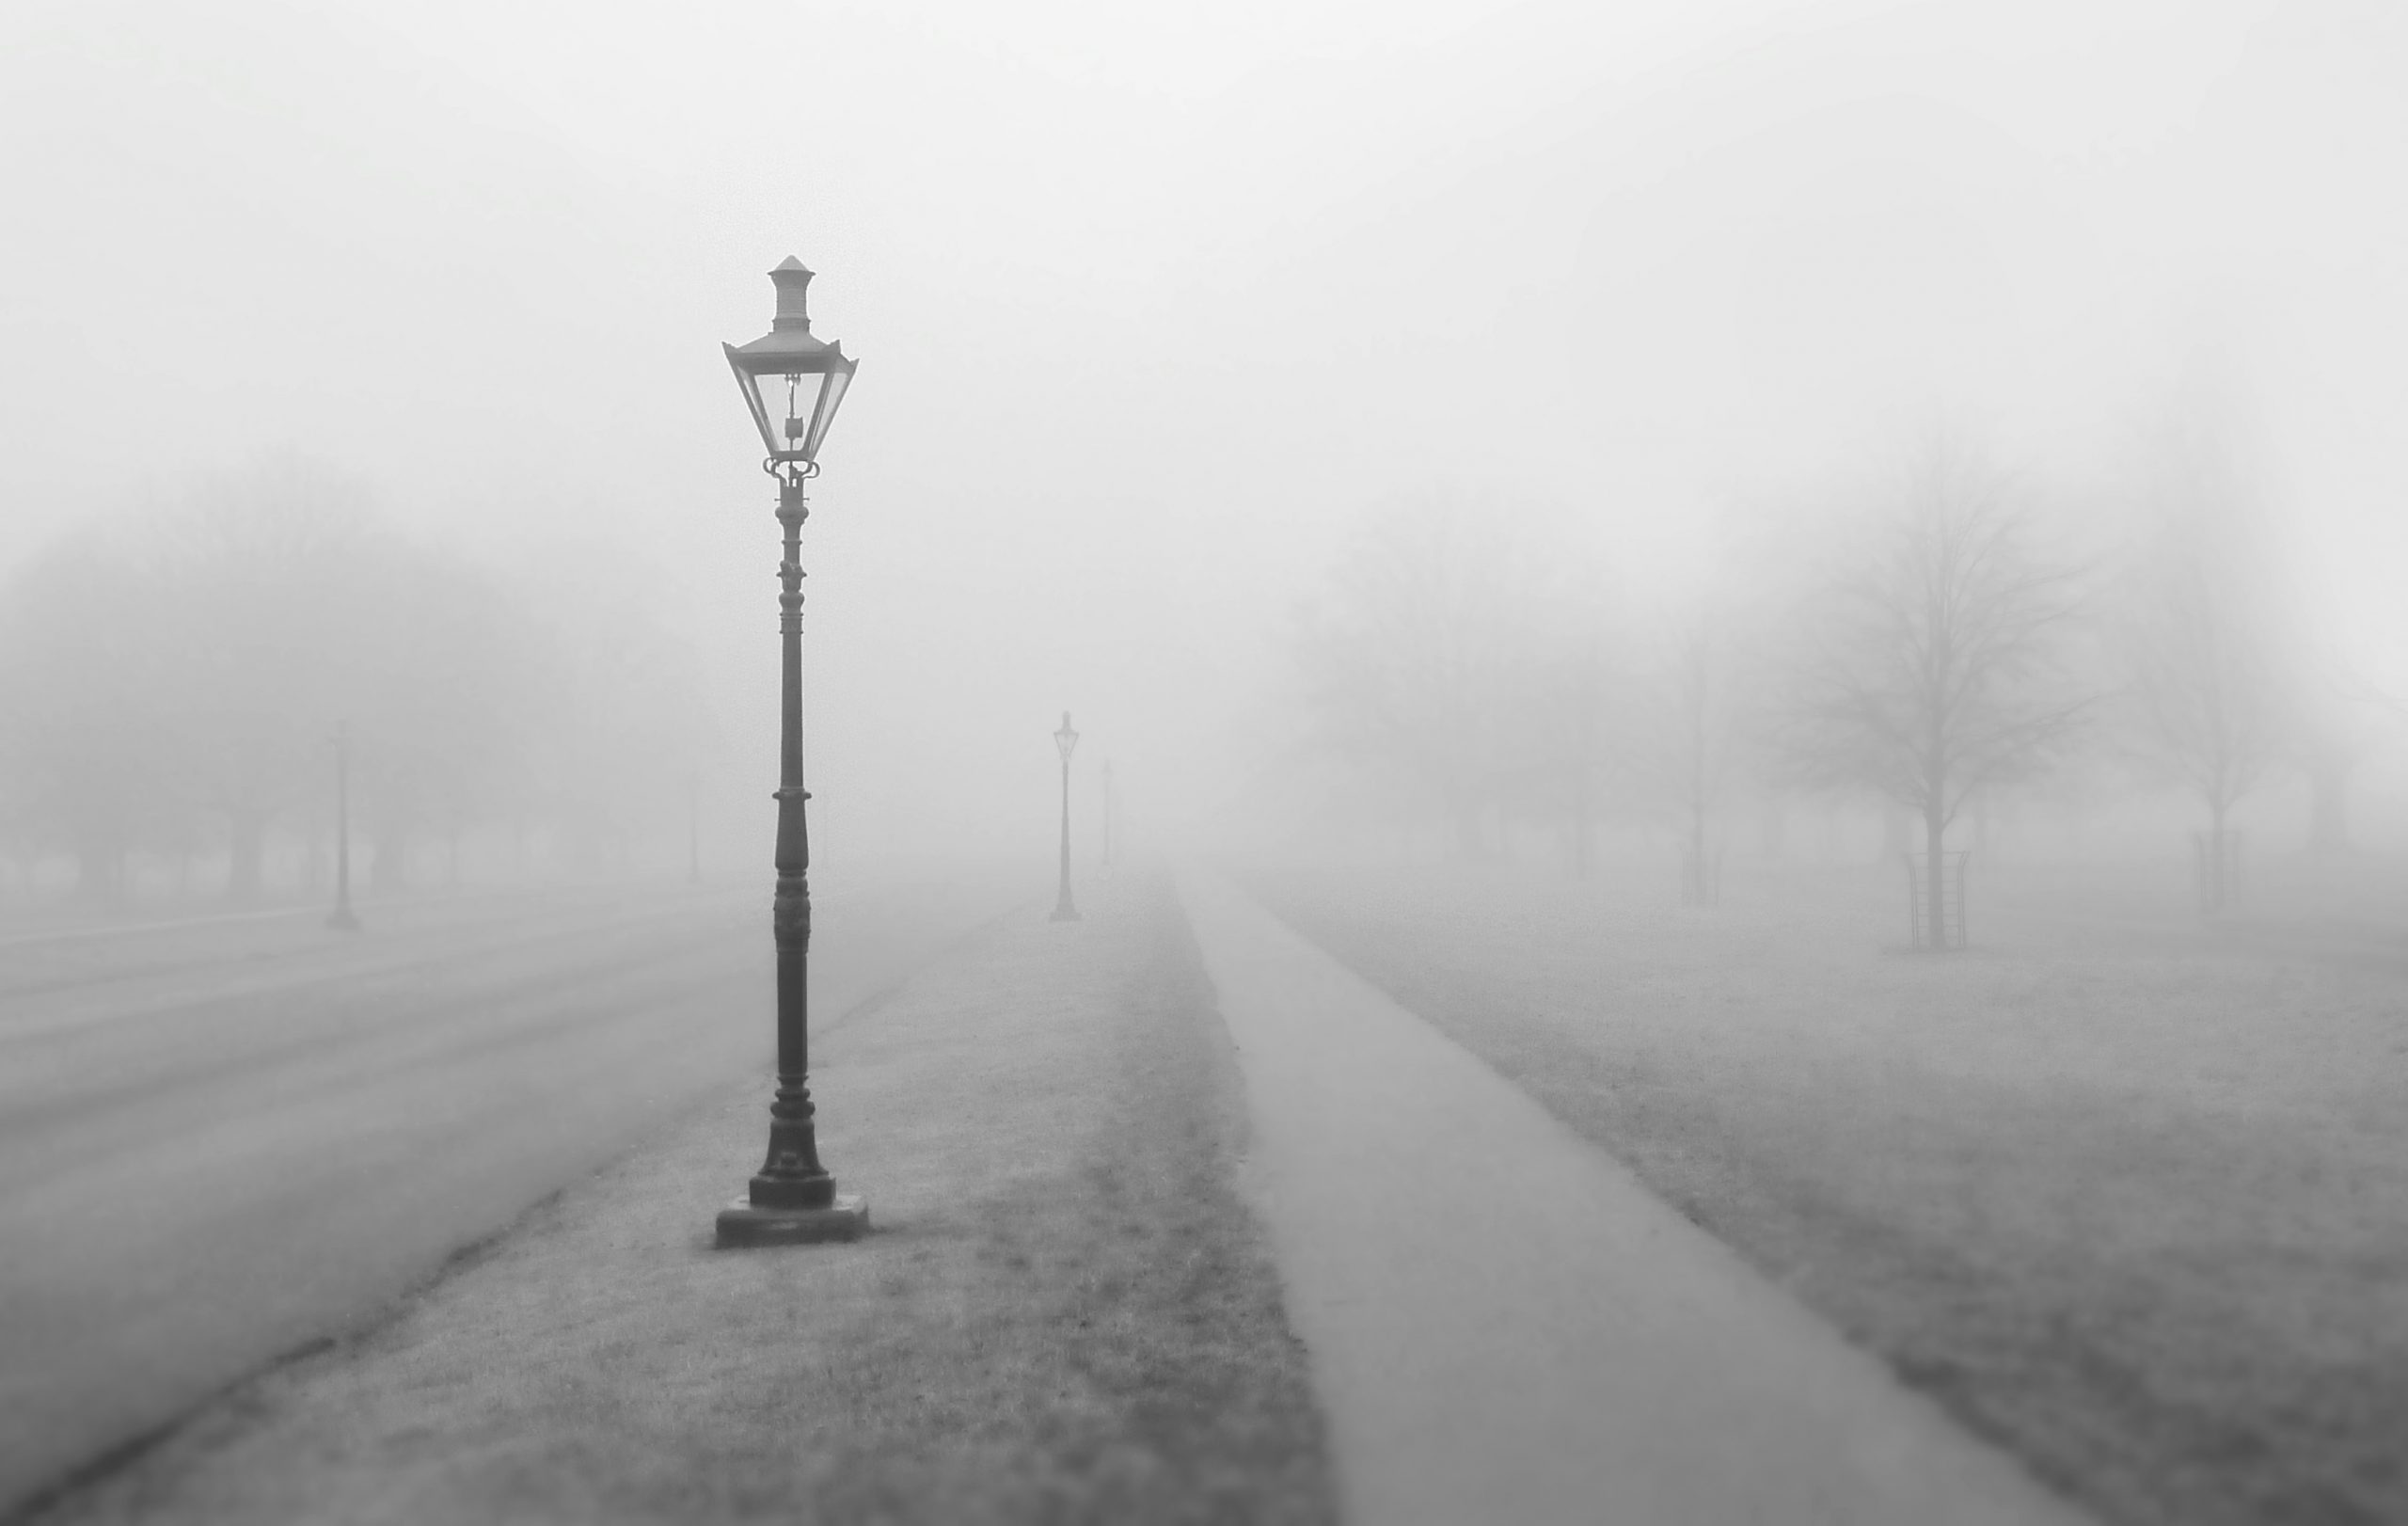 Foggy empty space with a dark street light and an empty sidewalk